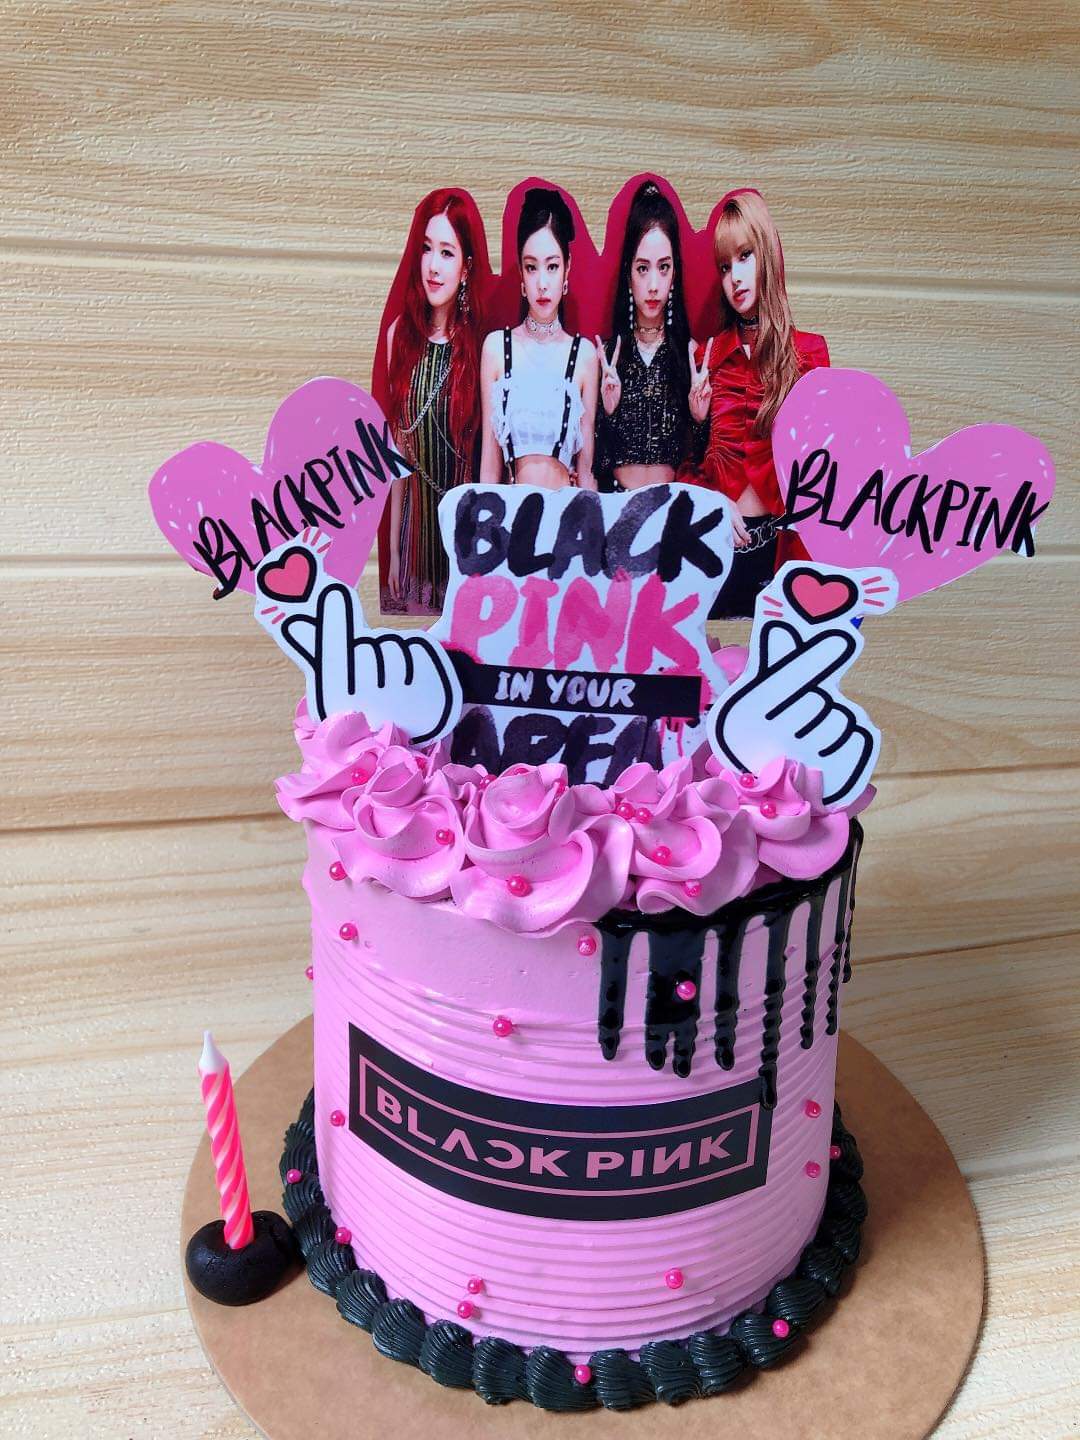 BLACKPINK Birthday Cake Ideas / Birthday Party Kpop Inspiration | Candy  birthday cakes, Bts cake, Birthday cake